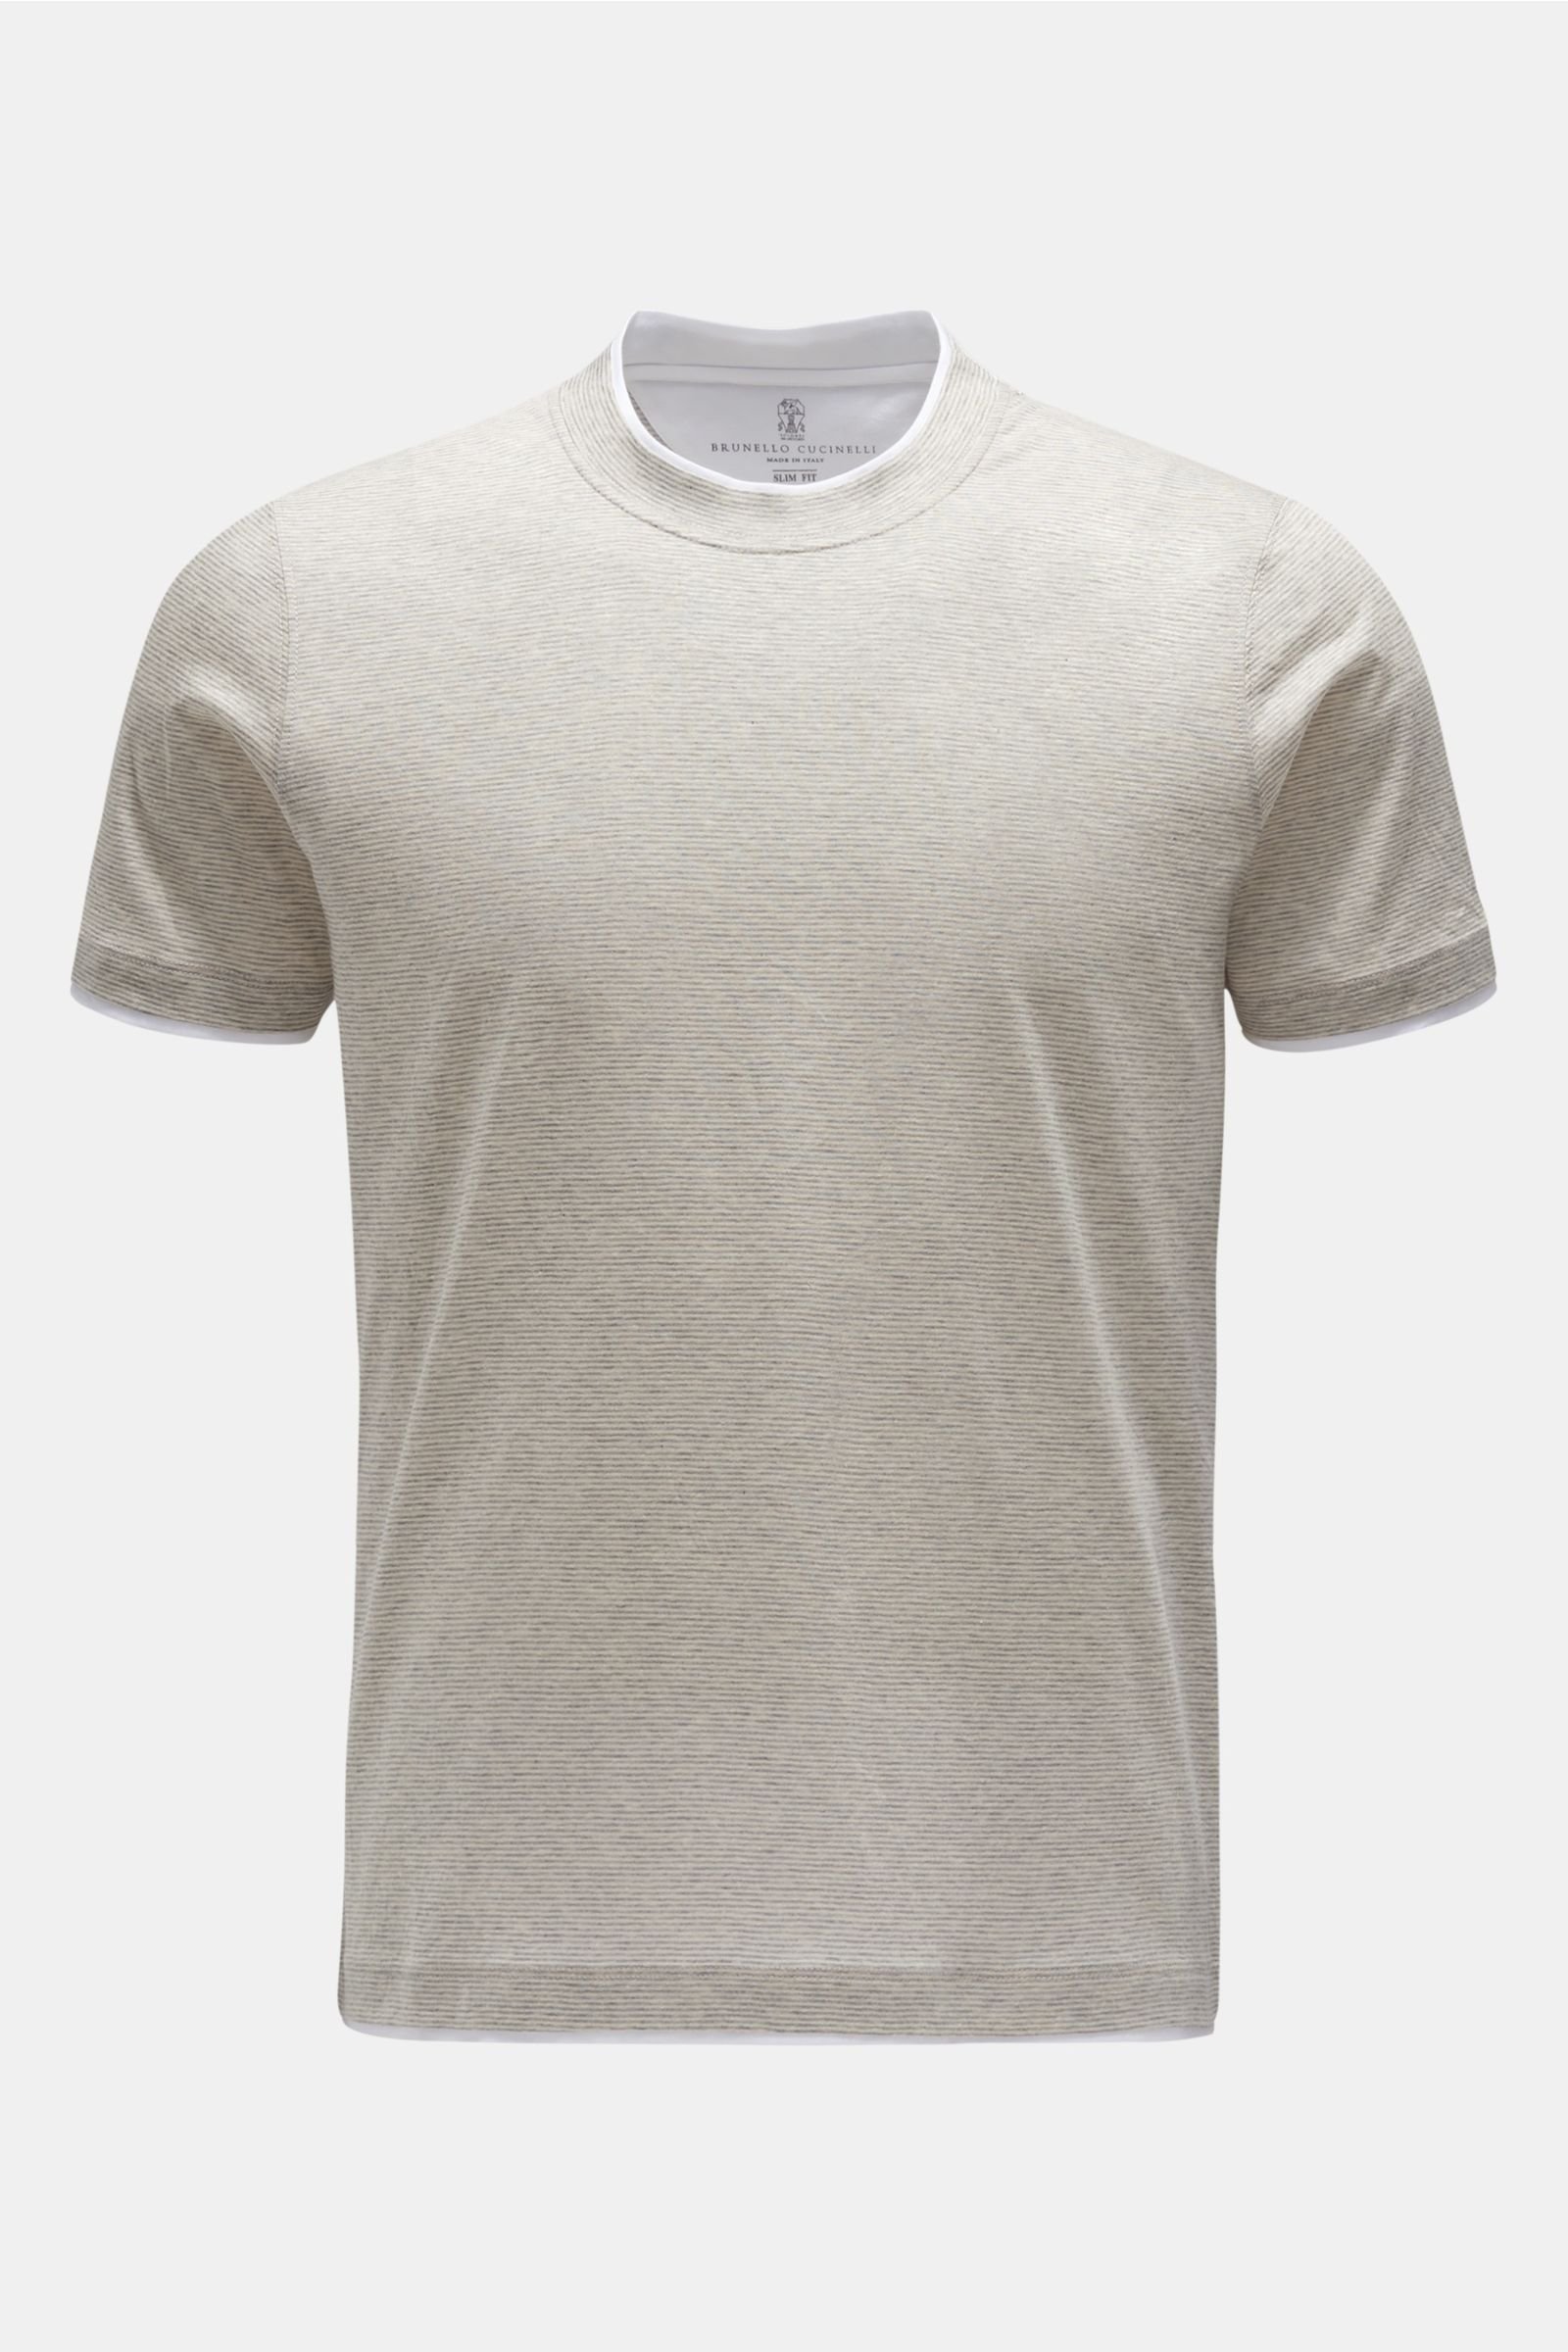 Crew neck T-shirt beige/light grey striped